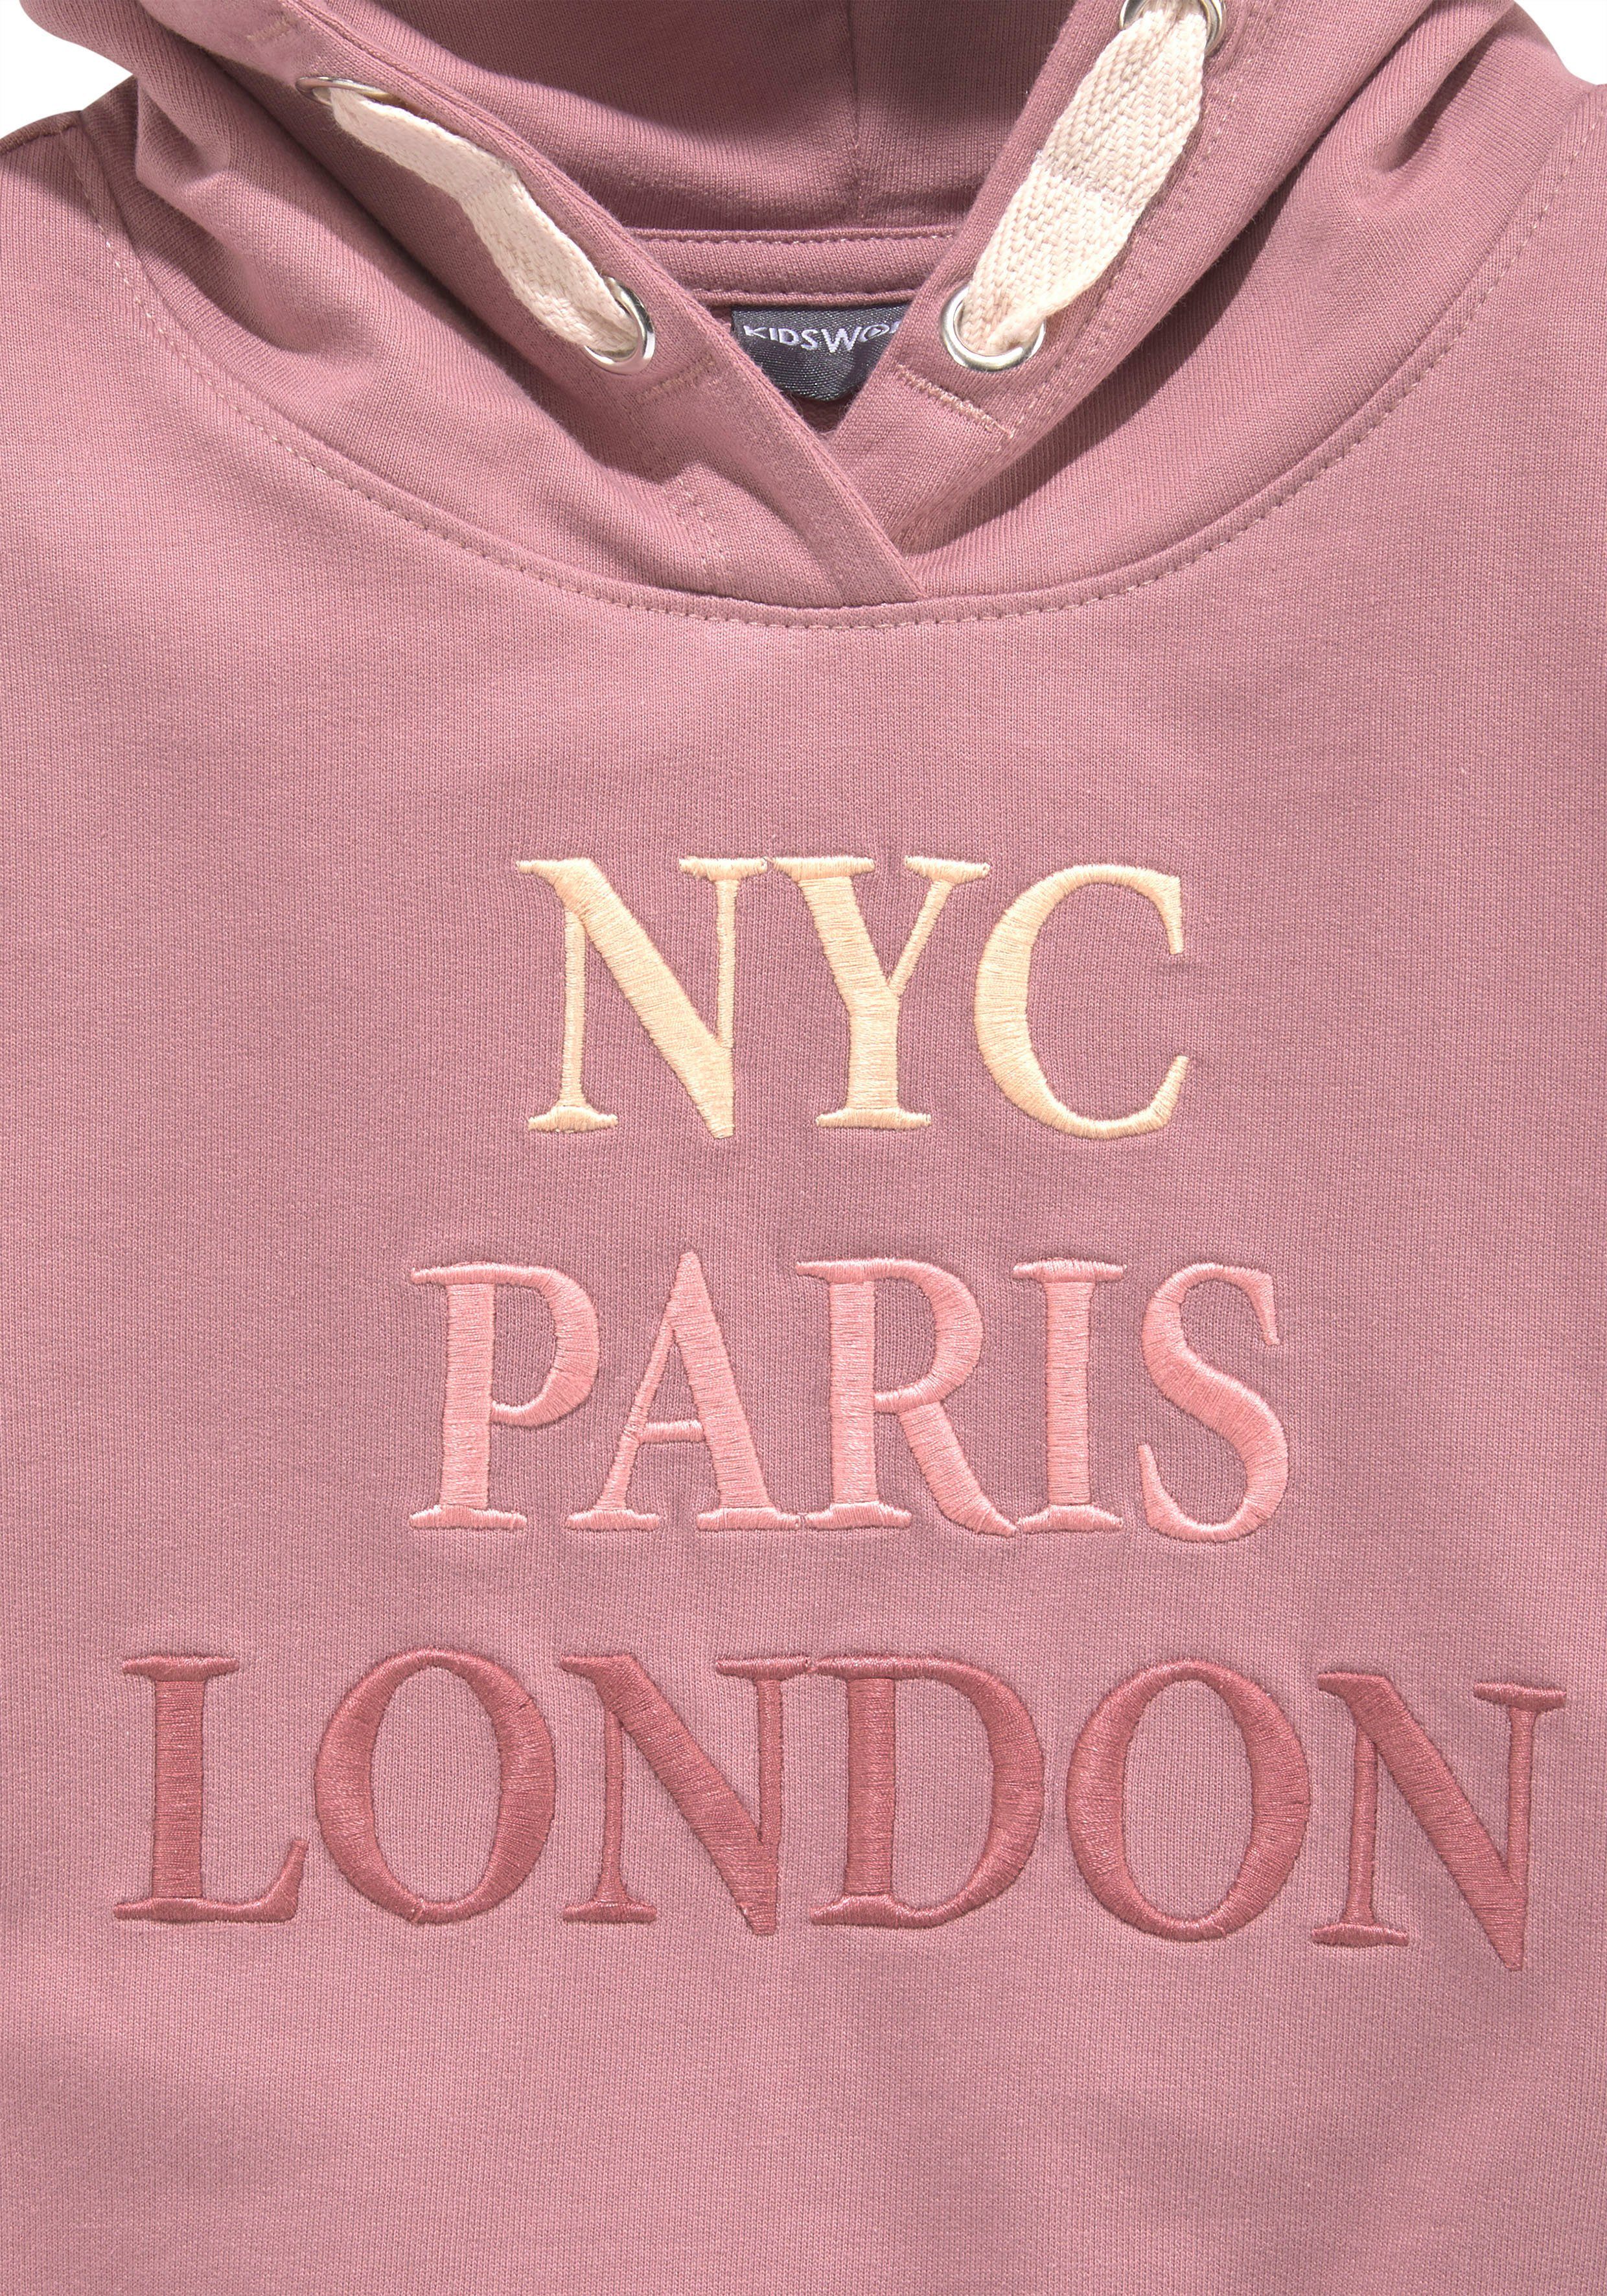 KIDSWORLD Kapuzensweatshirt NYC Paris London Stickerei mit